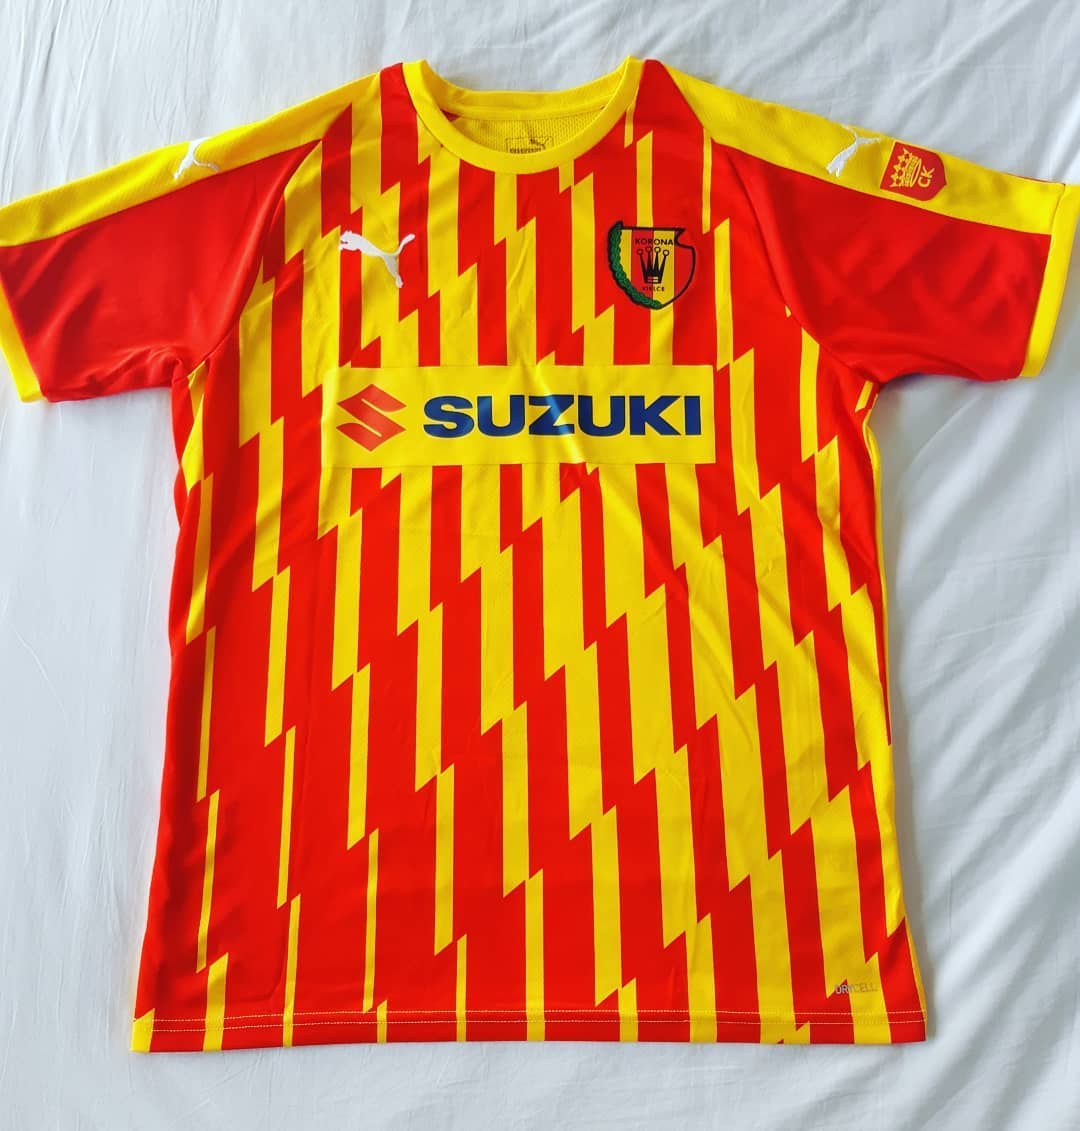 Korona Kielce Home 2019/2020 Football Shirt Manufactured By Puma. The club plays football in Poland.